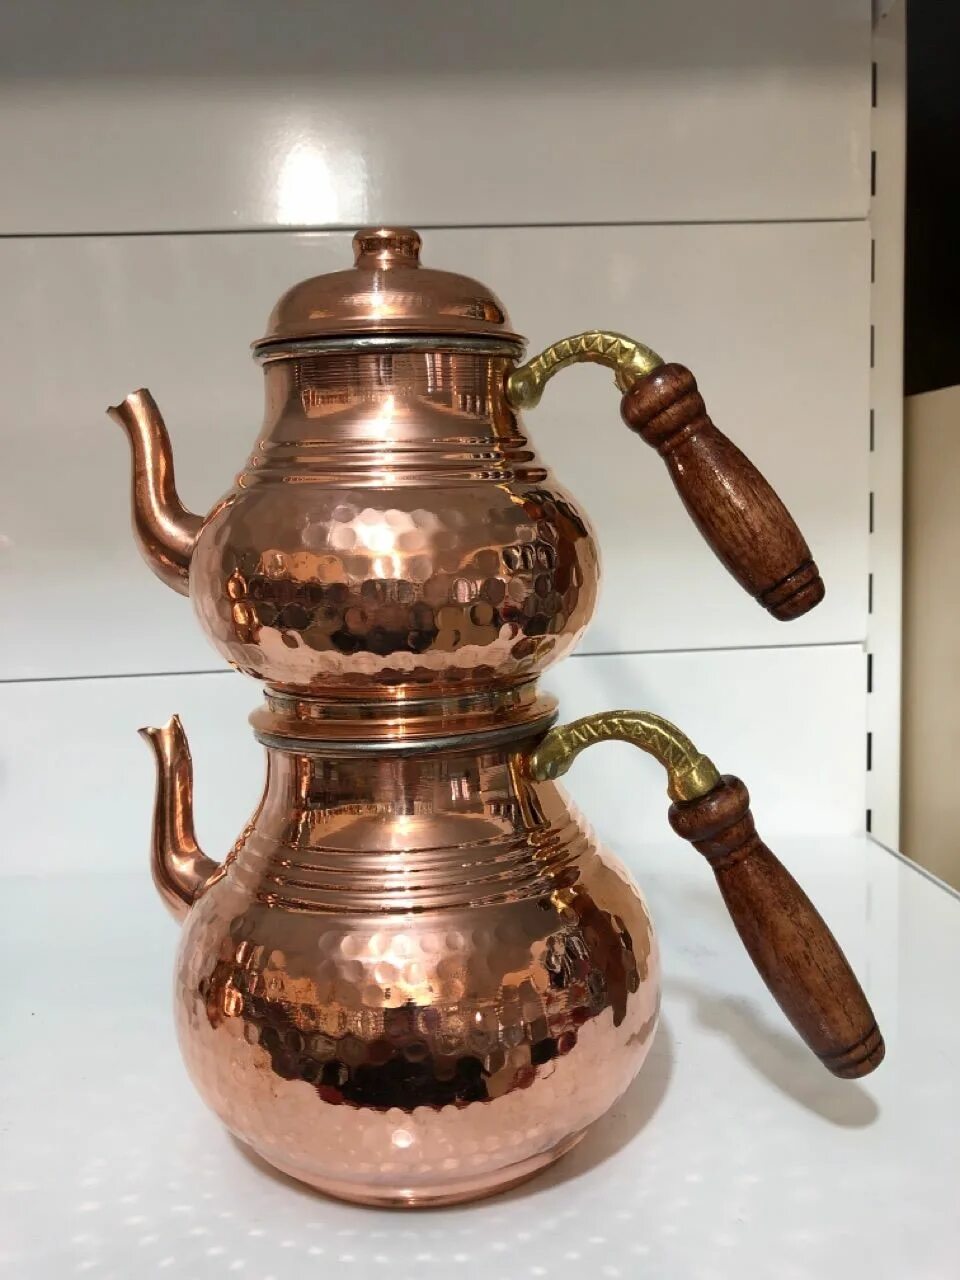 Двойной турецкий чайник чайданлык из меди. Турецкий чайник Caydanlik. Турецкие чайники чайданлык. Велберис турецкий чайник двойной.